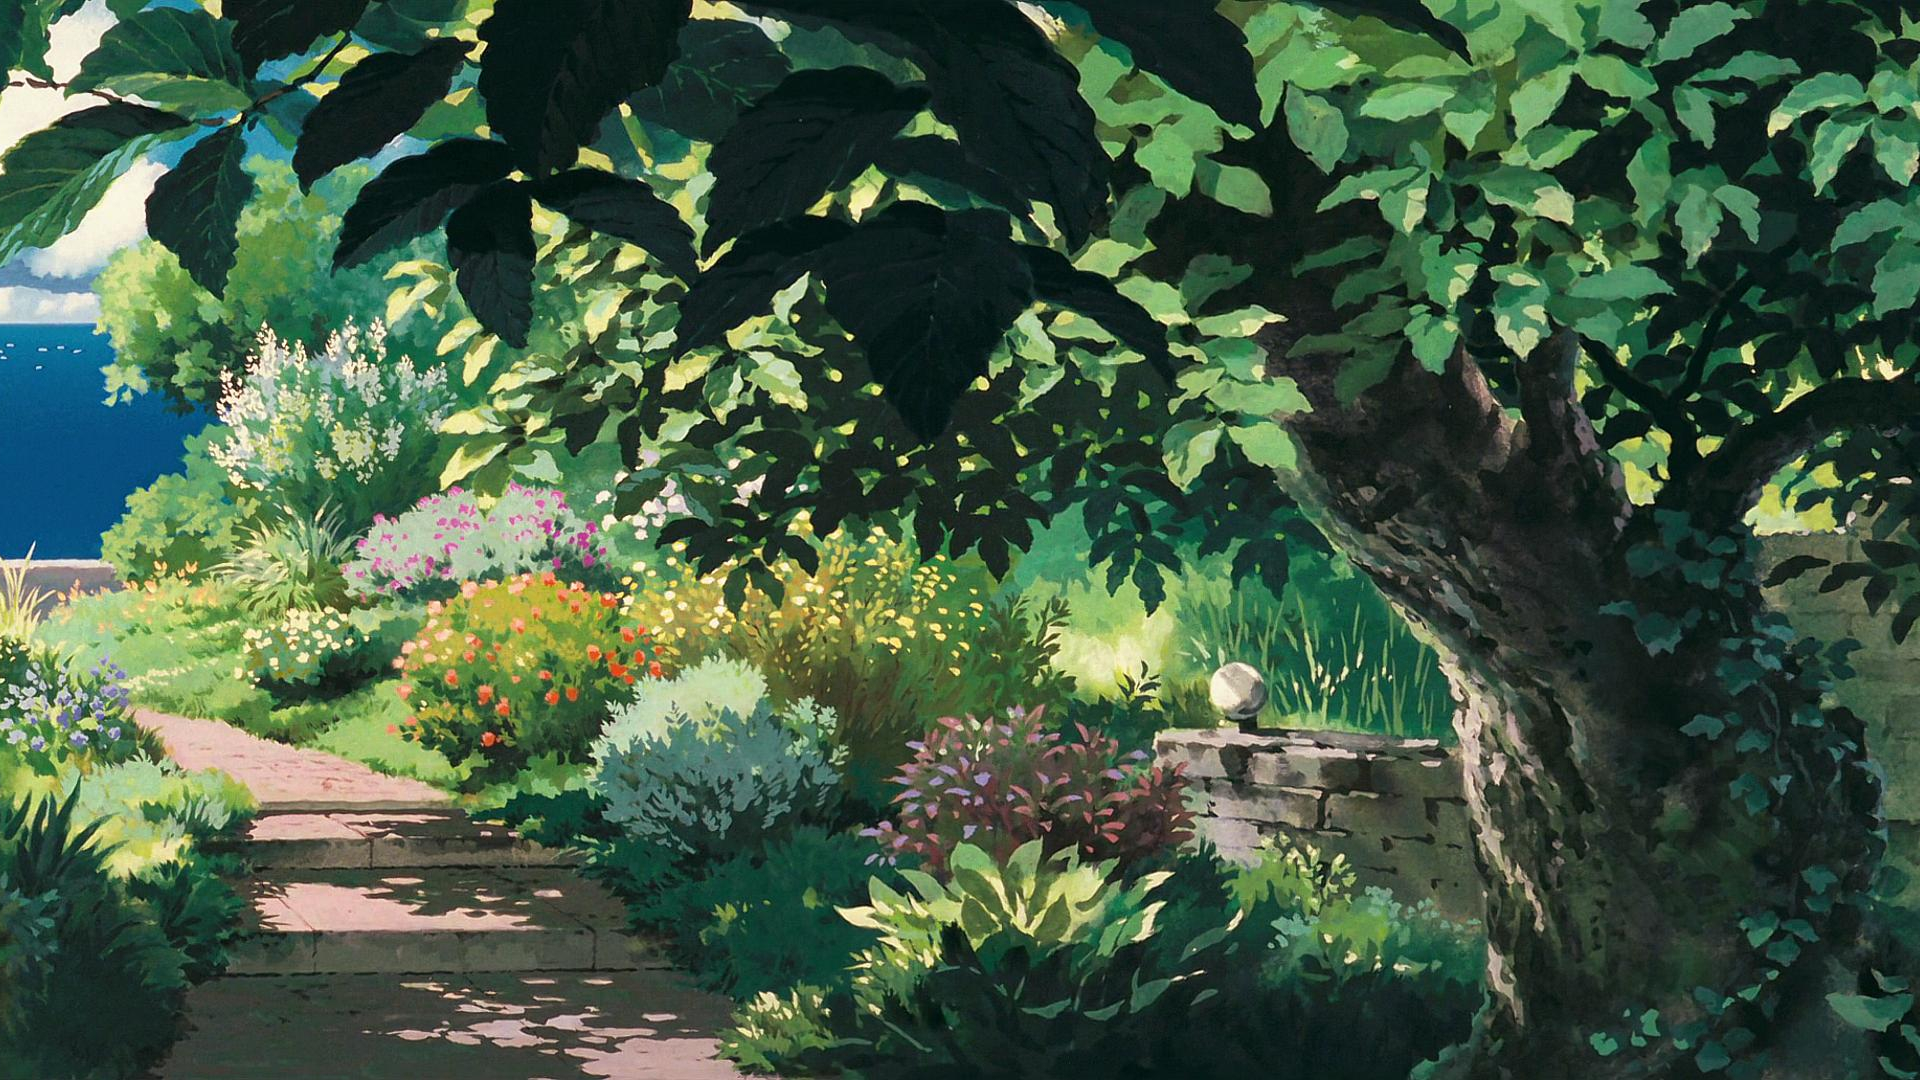 Studio Ghibli Desktop Wallpapers